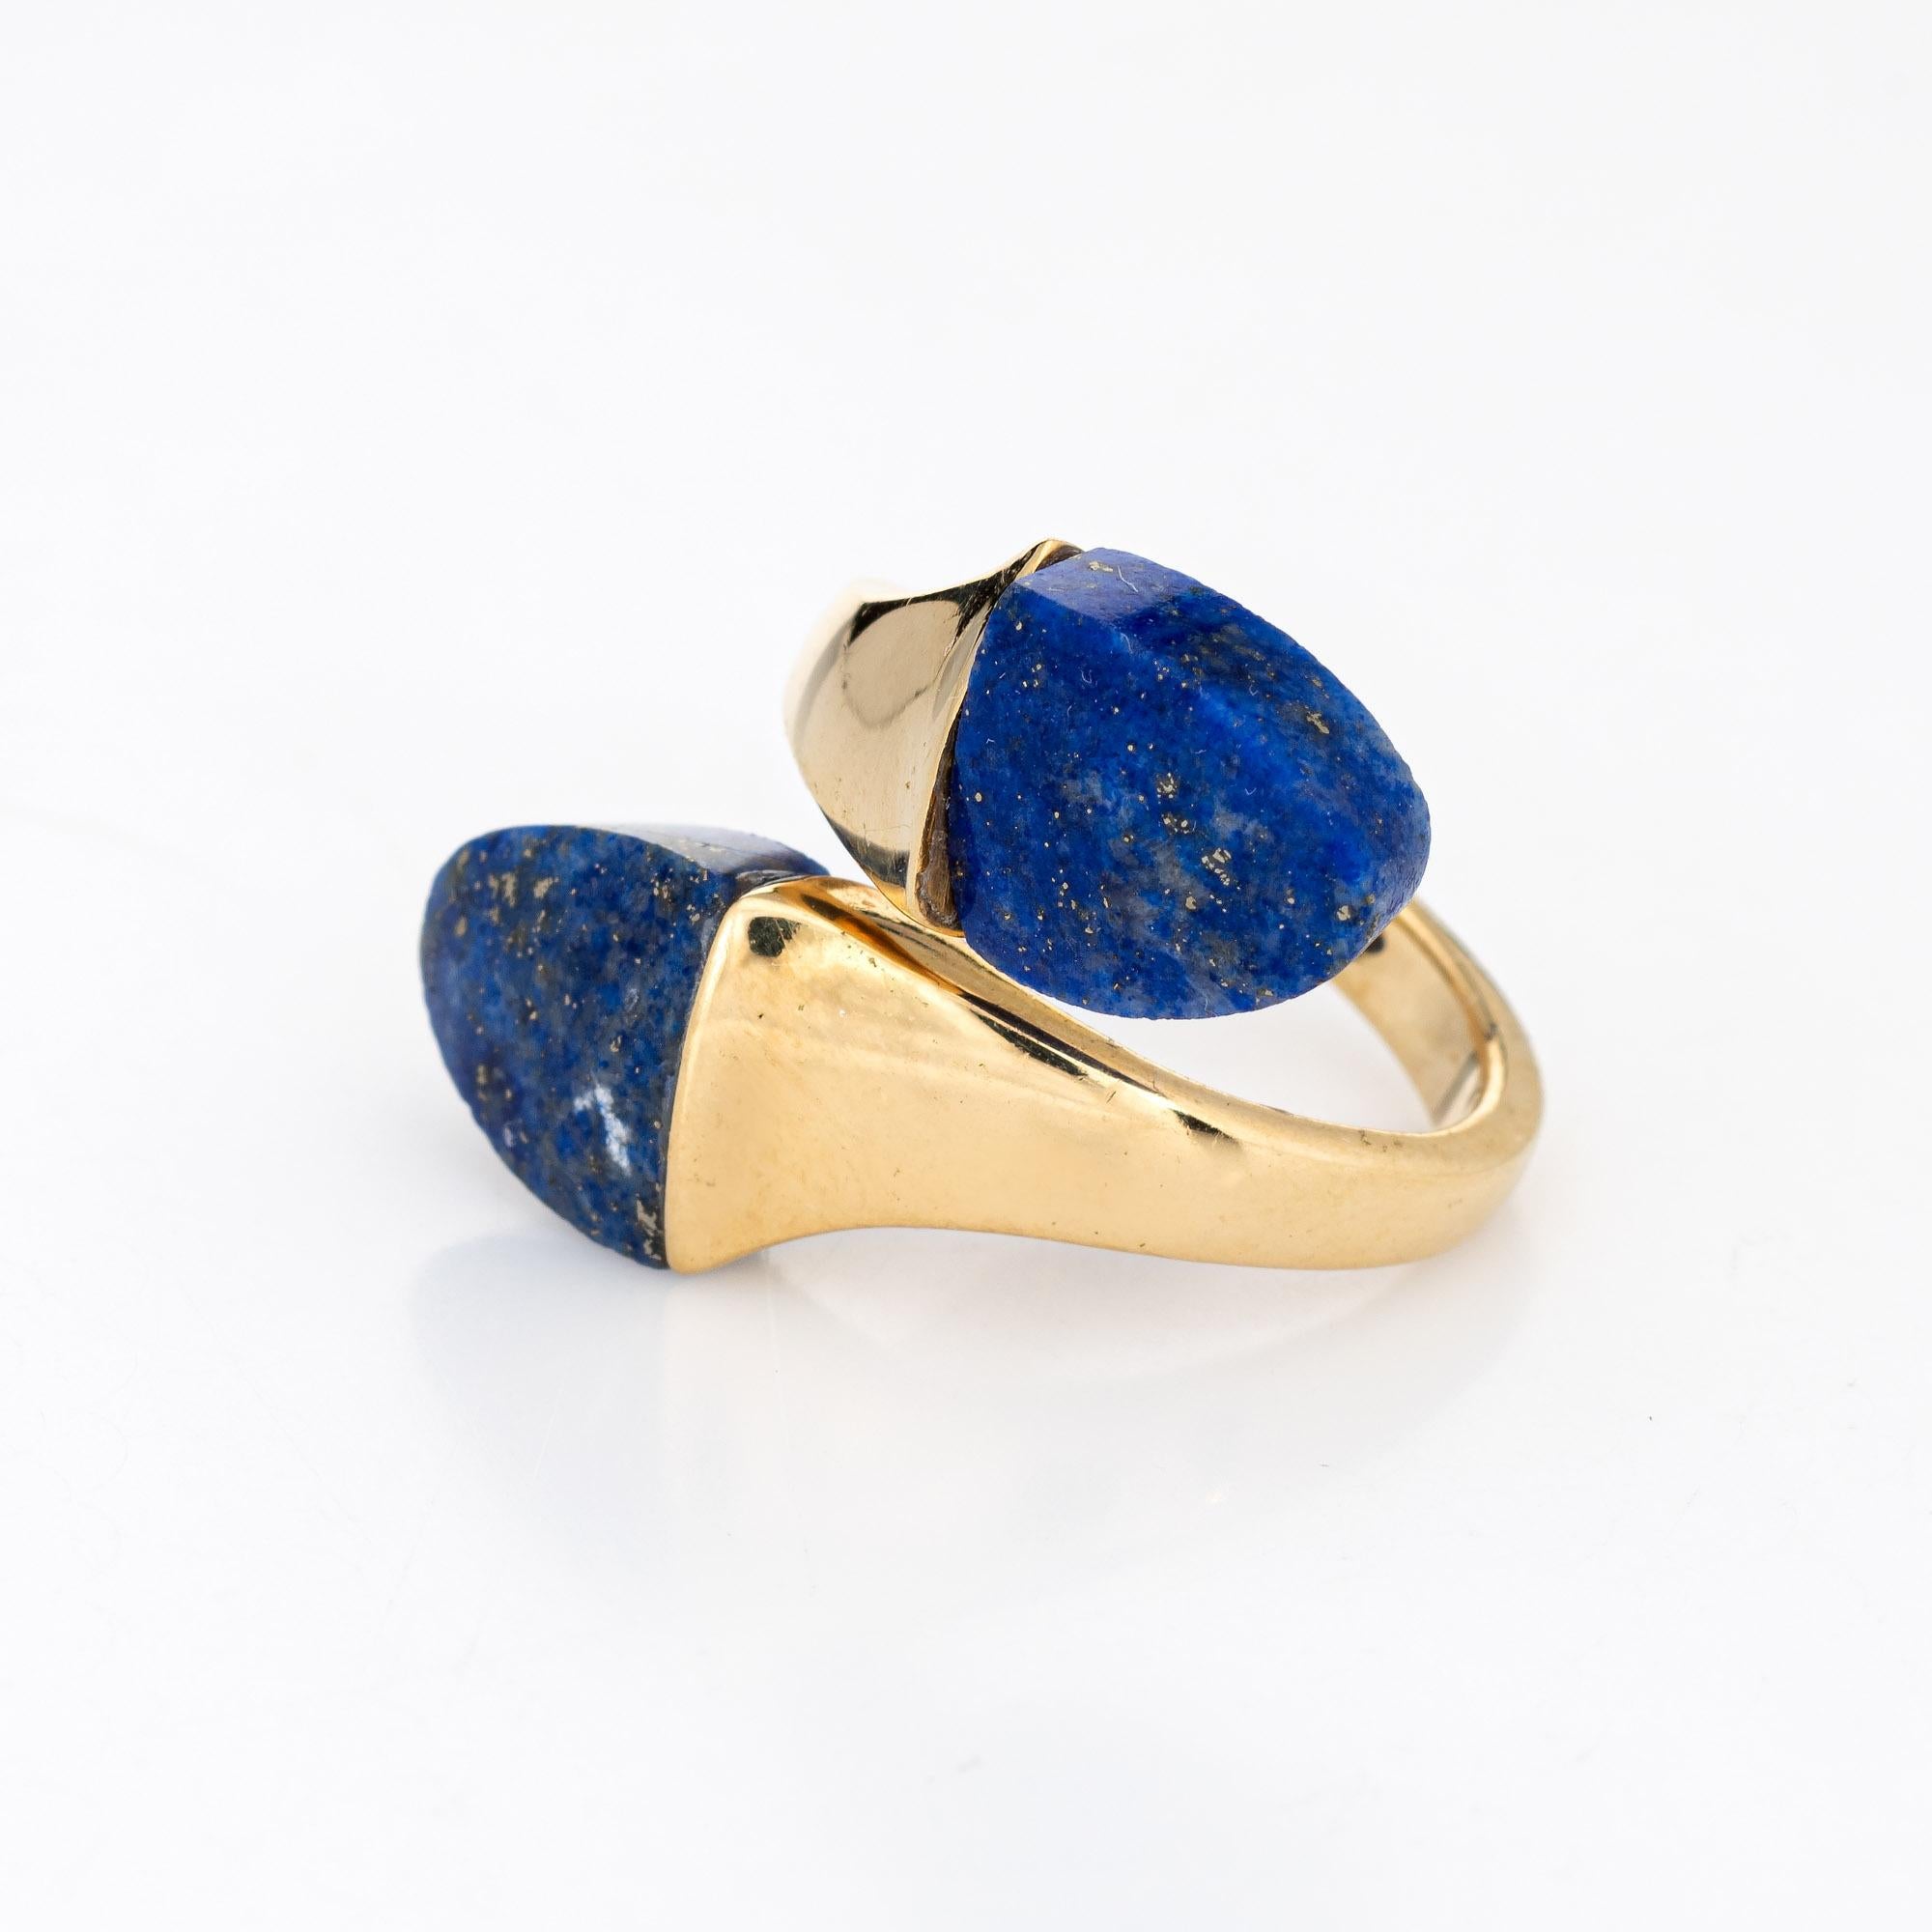 Cabochon Lapis Lazuli Bypass Ring Vintage 18 Karat Yellow Gold Moi et Toi Estate Jewelry